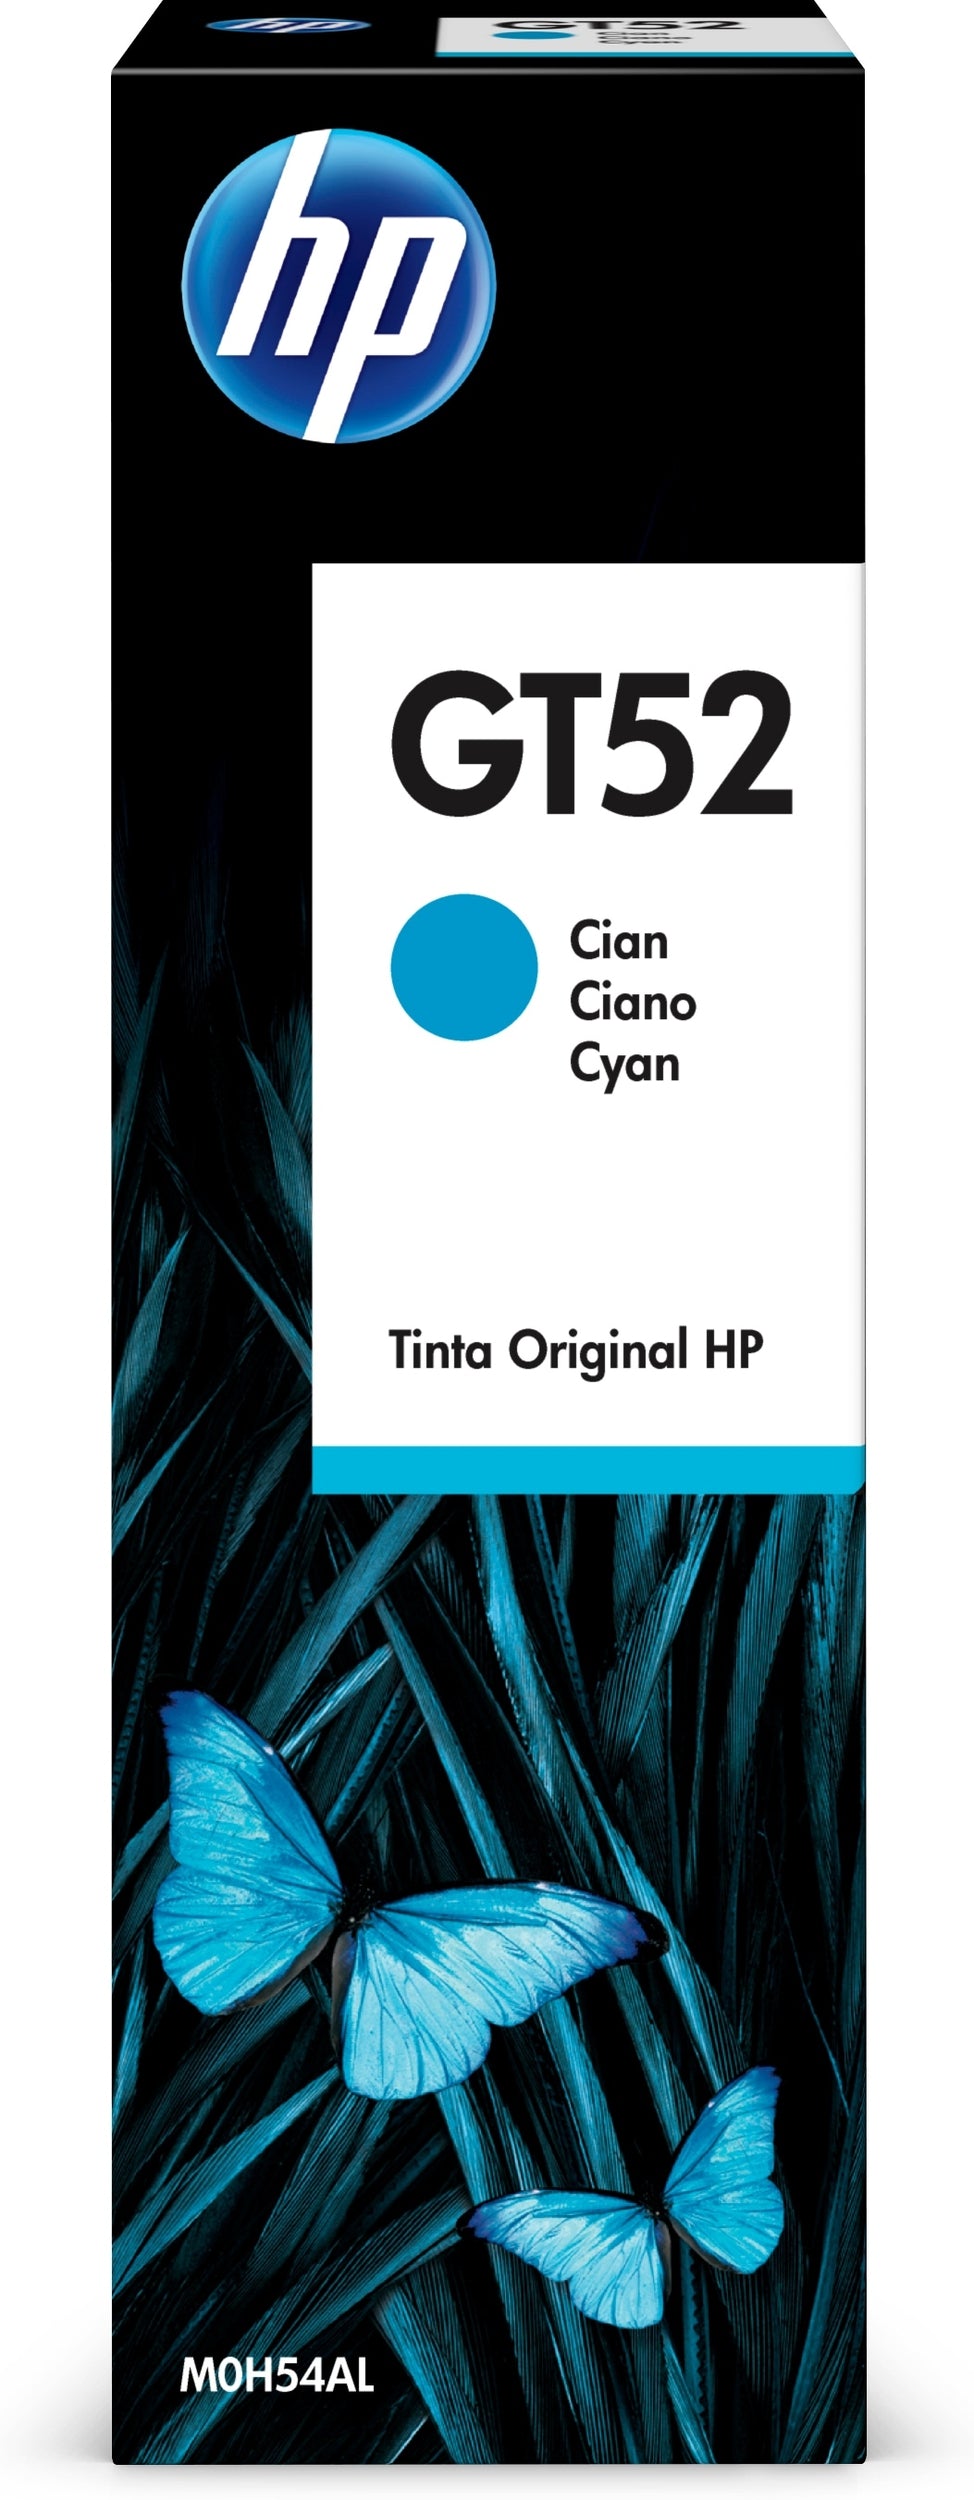 Botella De Tinta Hp Gt52 M0H54Al - Cian